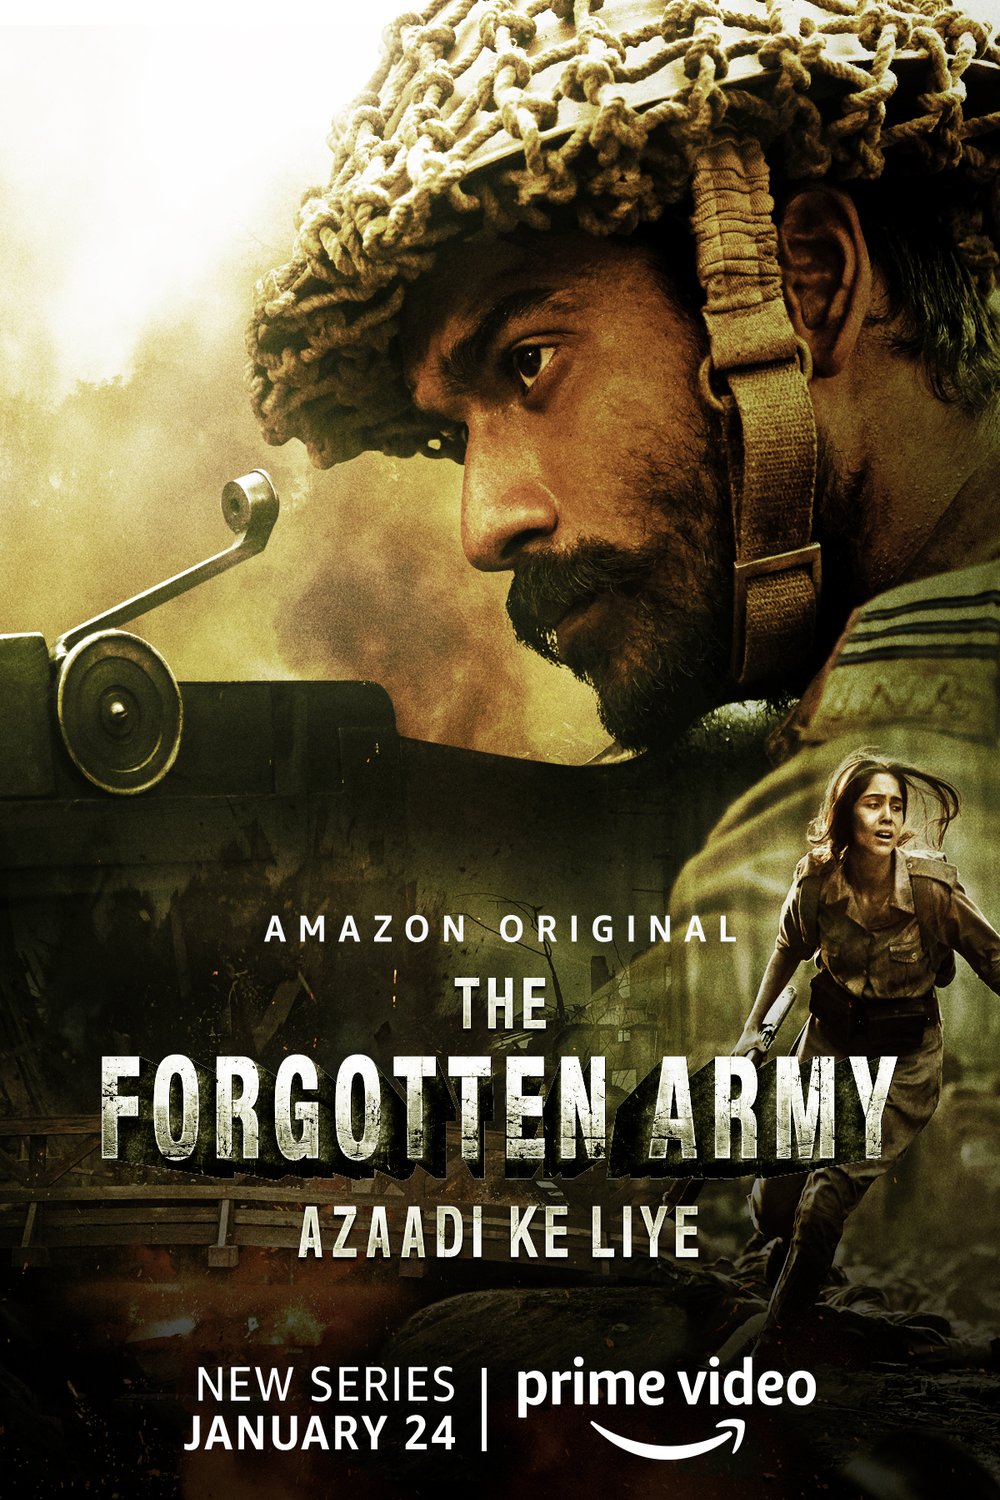 Hindi poster of the movie The Forgotten Army - Azaadi ke liye